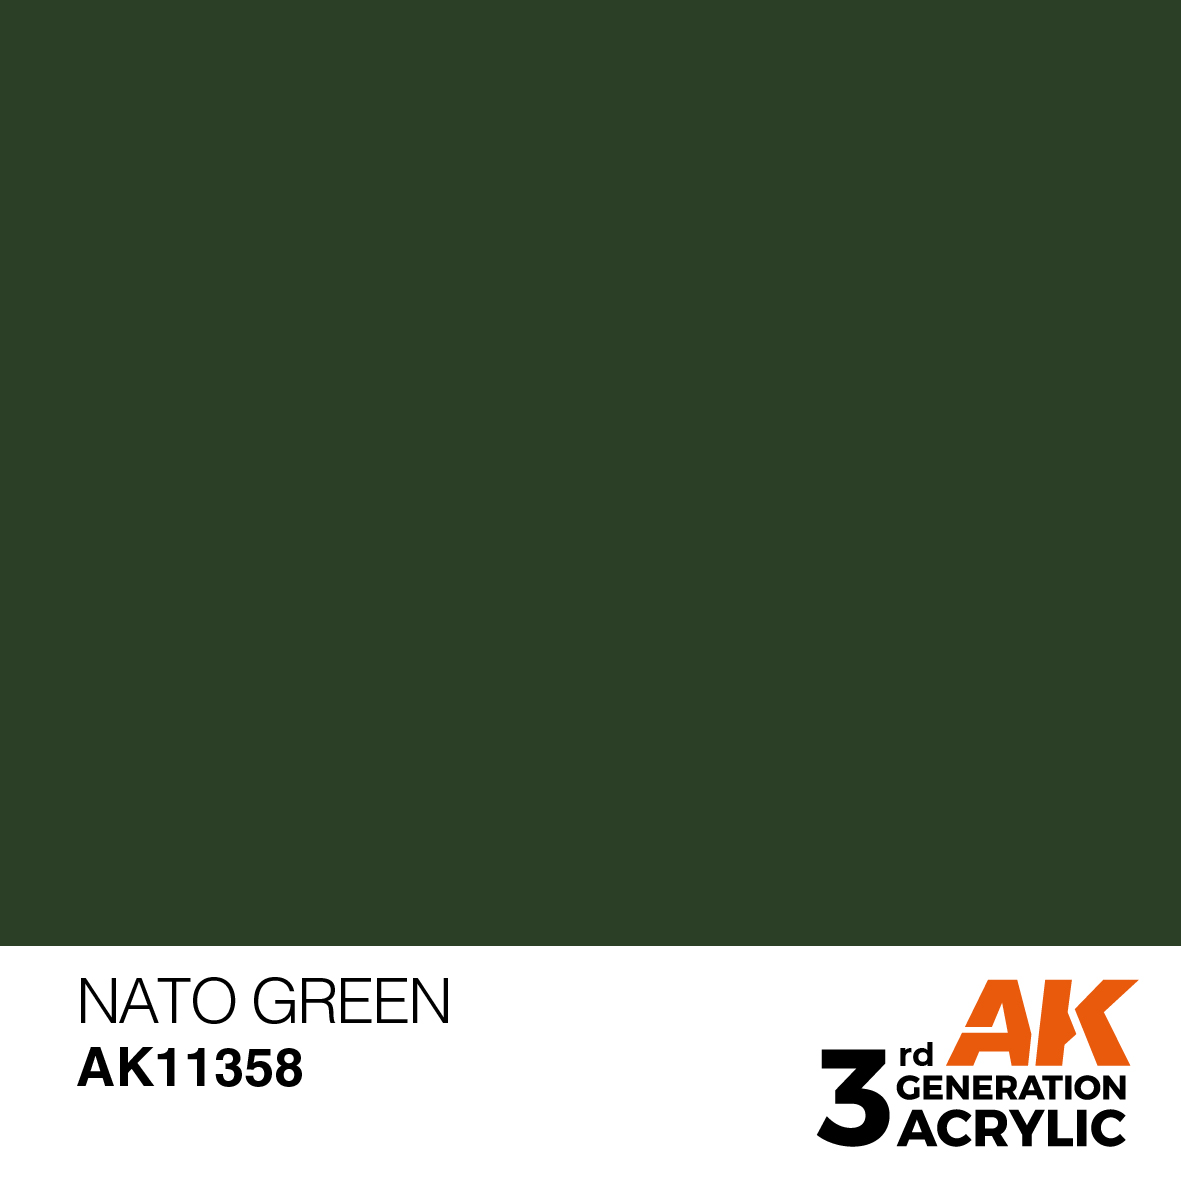 NATO GREEN – AFV